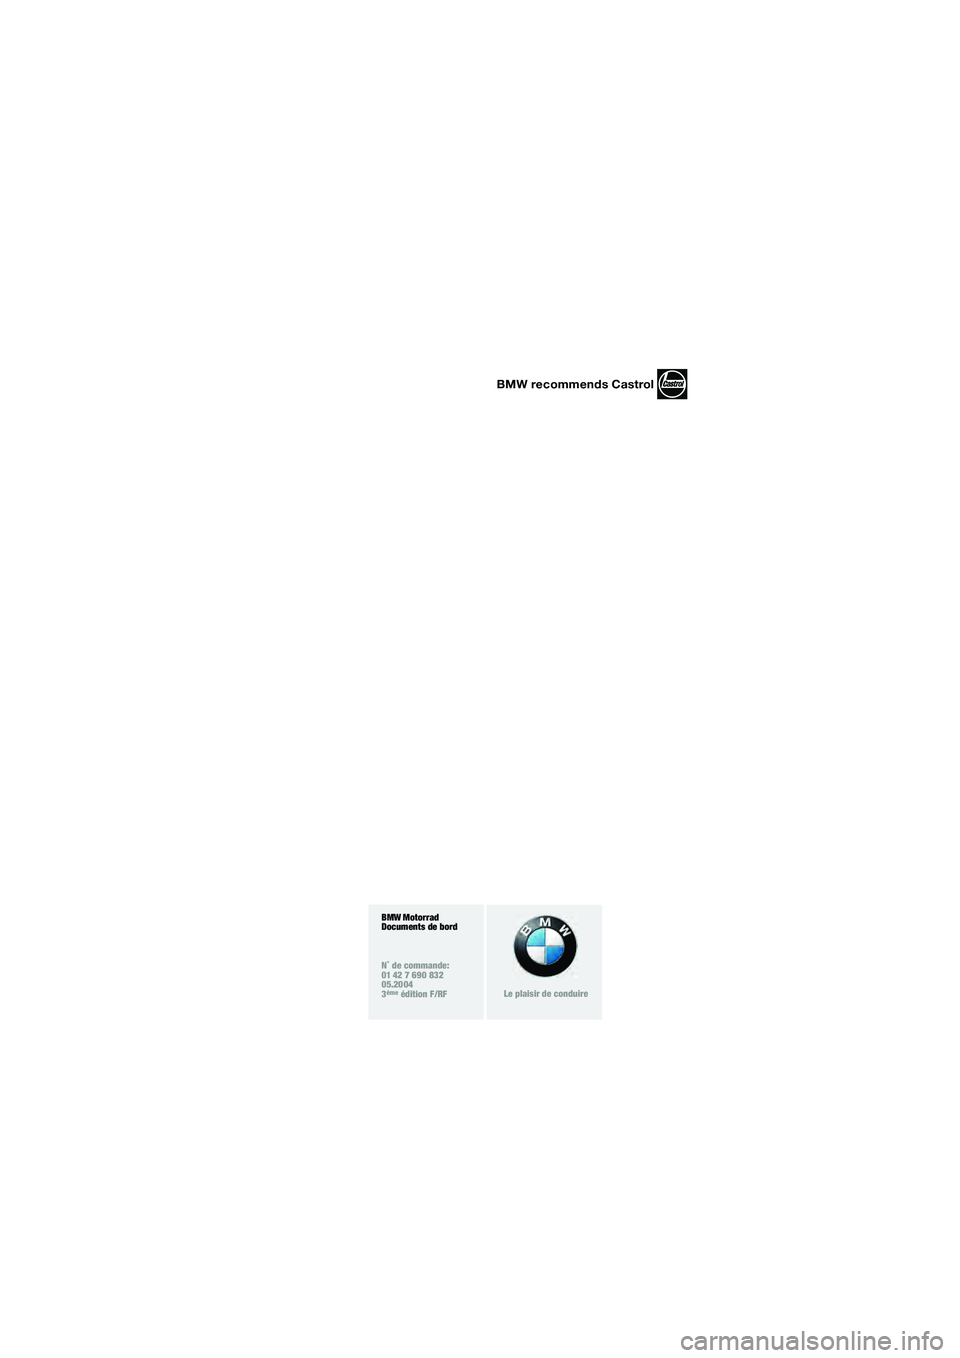 BMW MOTORRAD K 1200 RS 2004  Livret de bord (in French) BMW recommends Castrol
BMW Motorrad
Documents de bord
N˚ de commande:
01 42 7 690 832
05.2004
3
ème édition F/RFLe plaisir de conduire
20k41bkf3.book  Seite 84  Mittwoch, 26. Mai 2004  3:41 15 